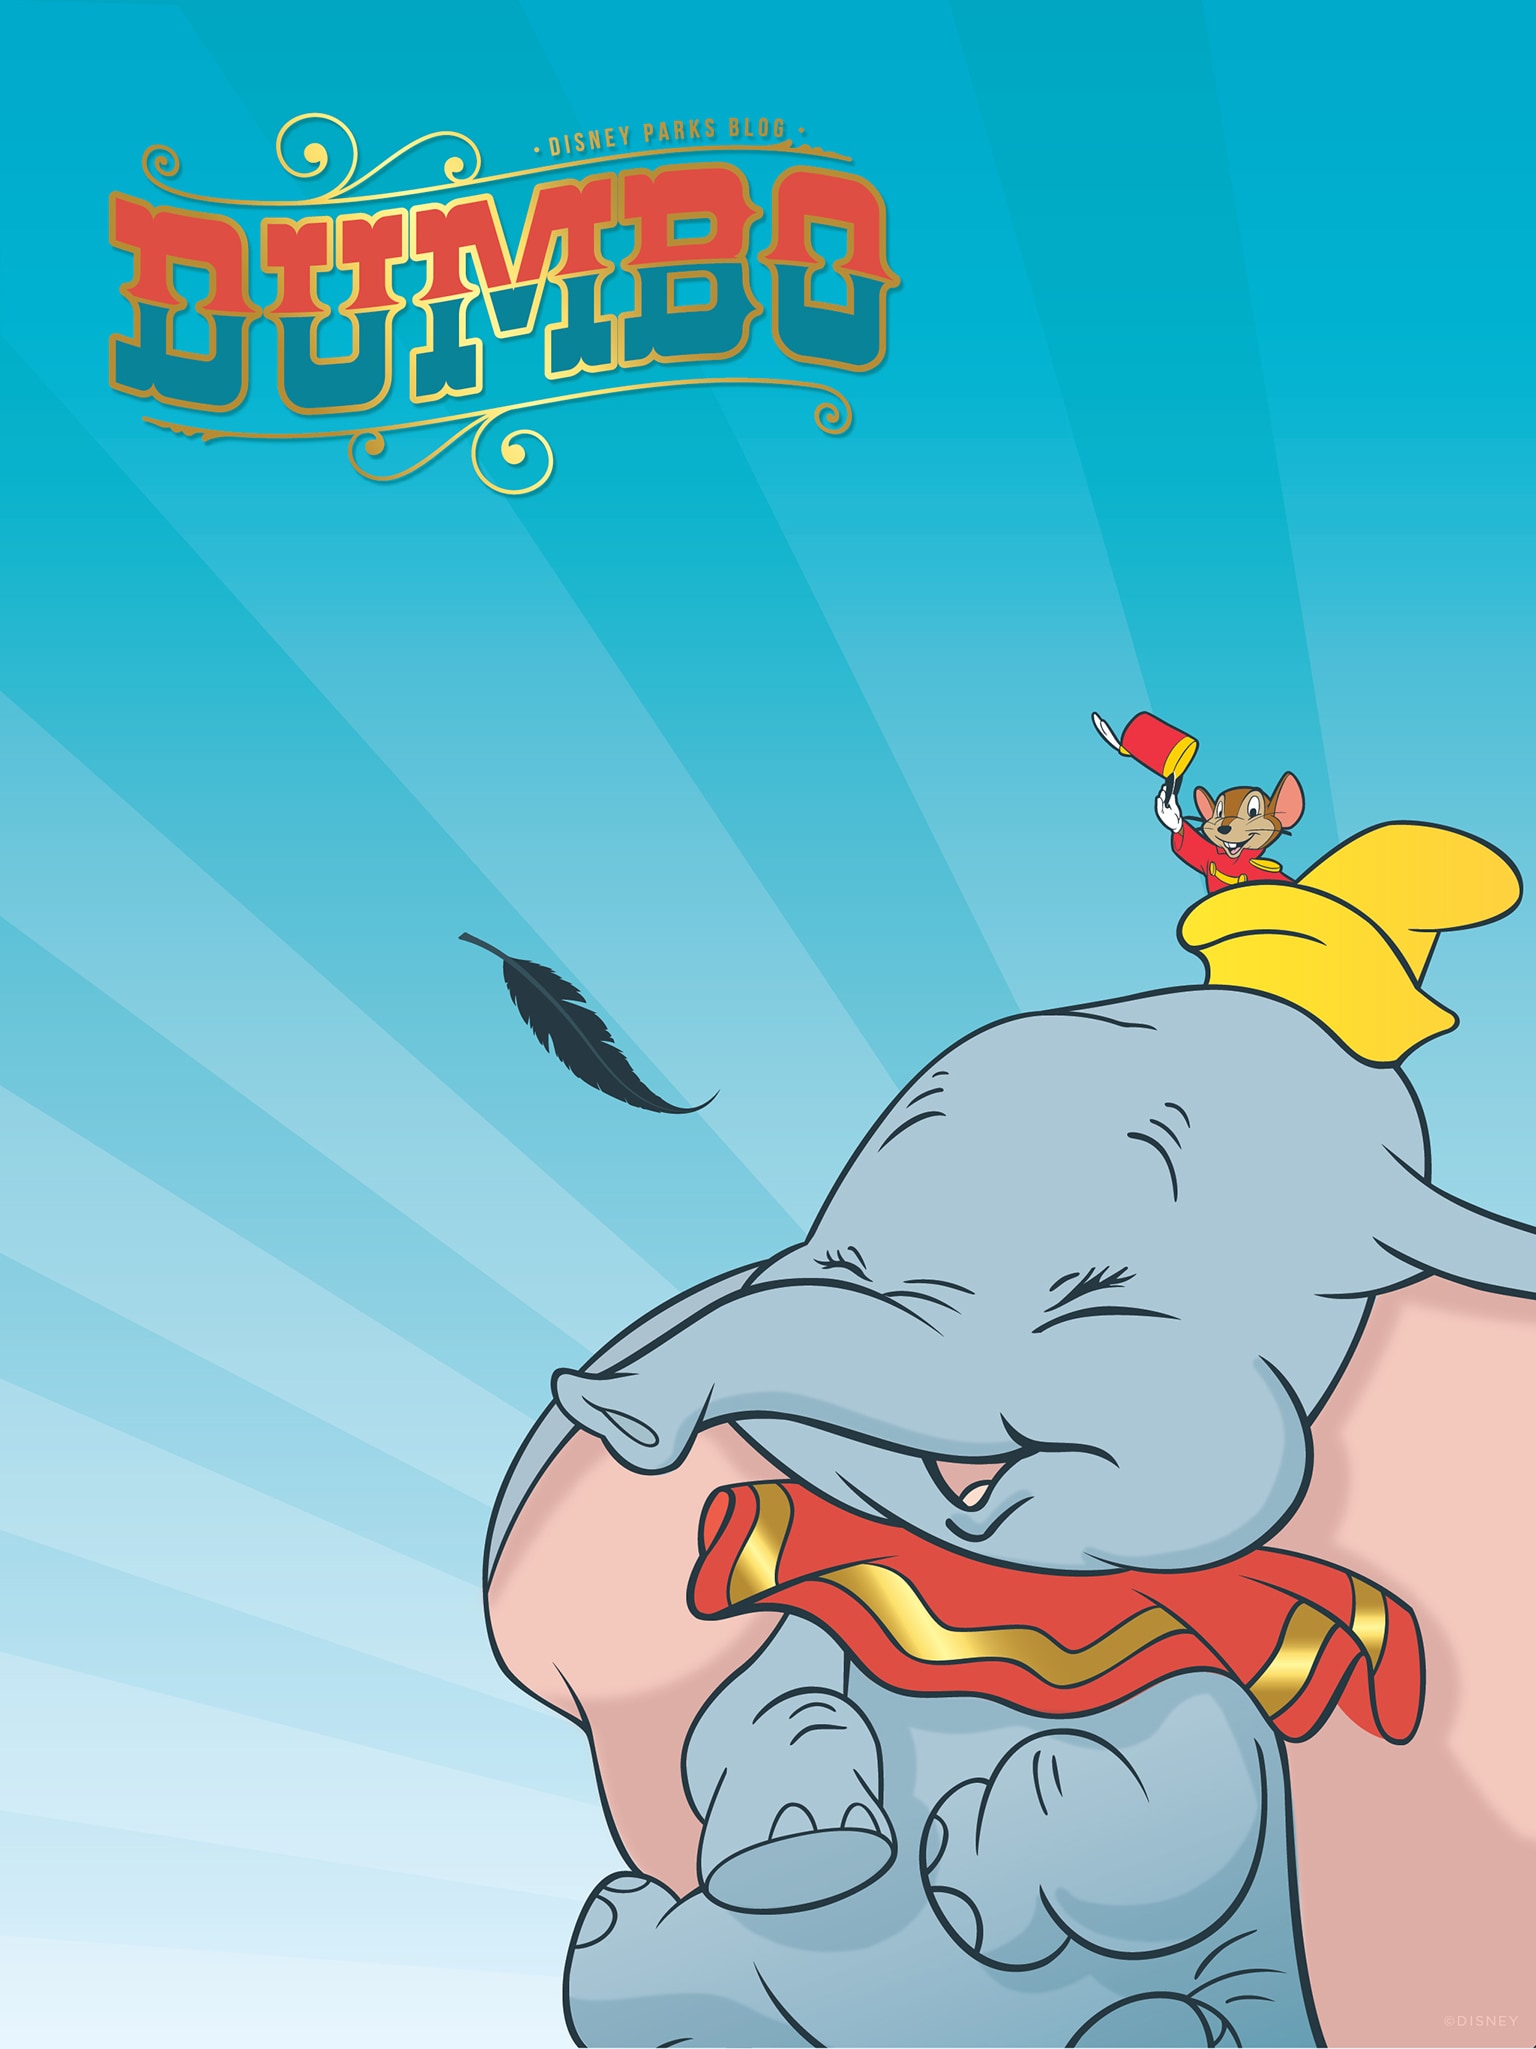 2019 'Dumbo' Wallpaper – Desktop/iPad | Disney Parks Blog